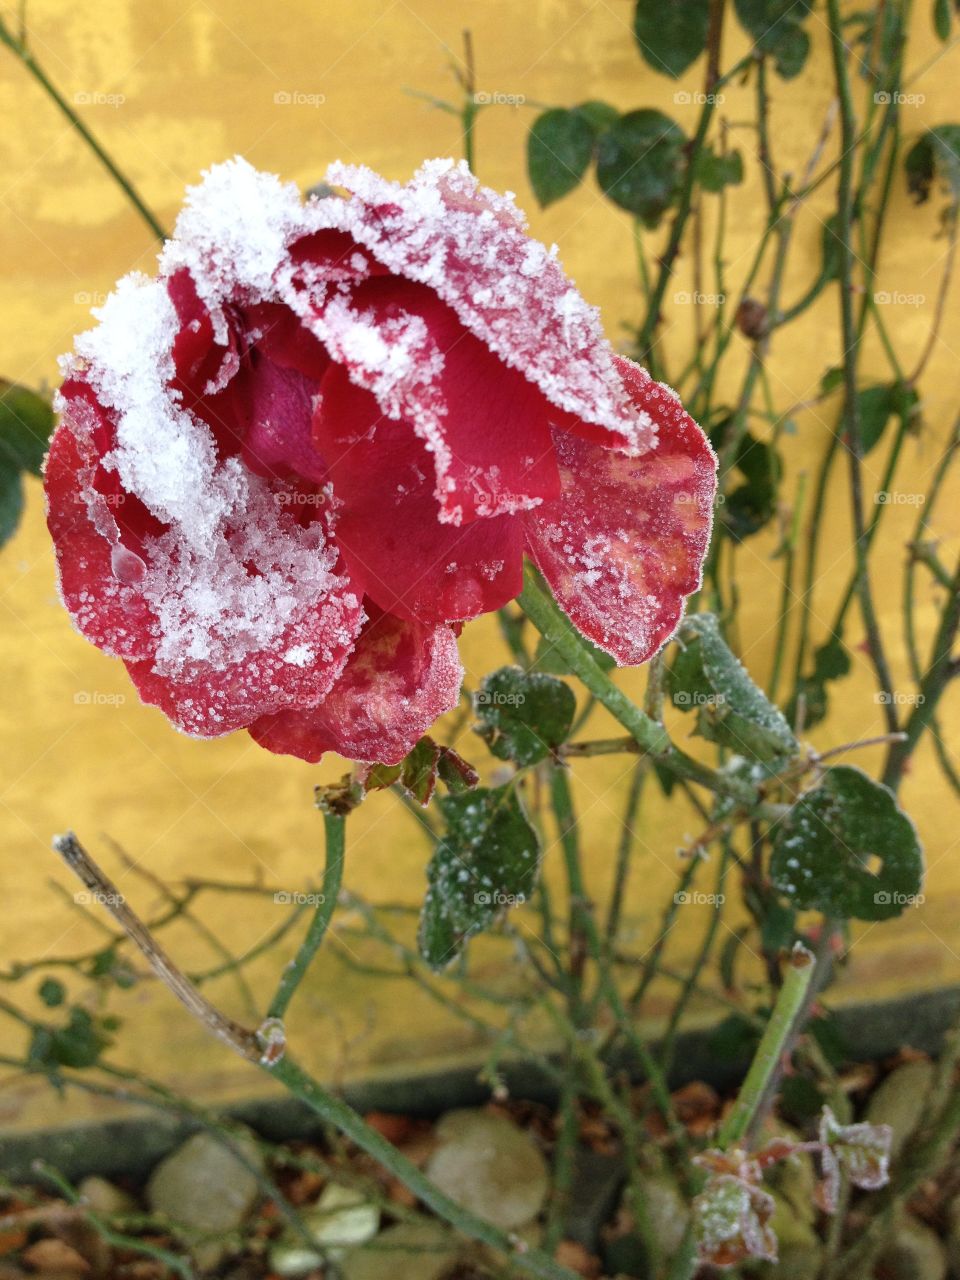 Snow rose